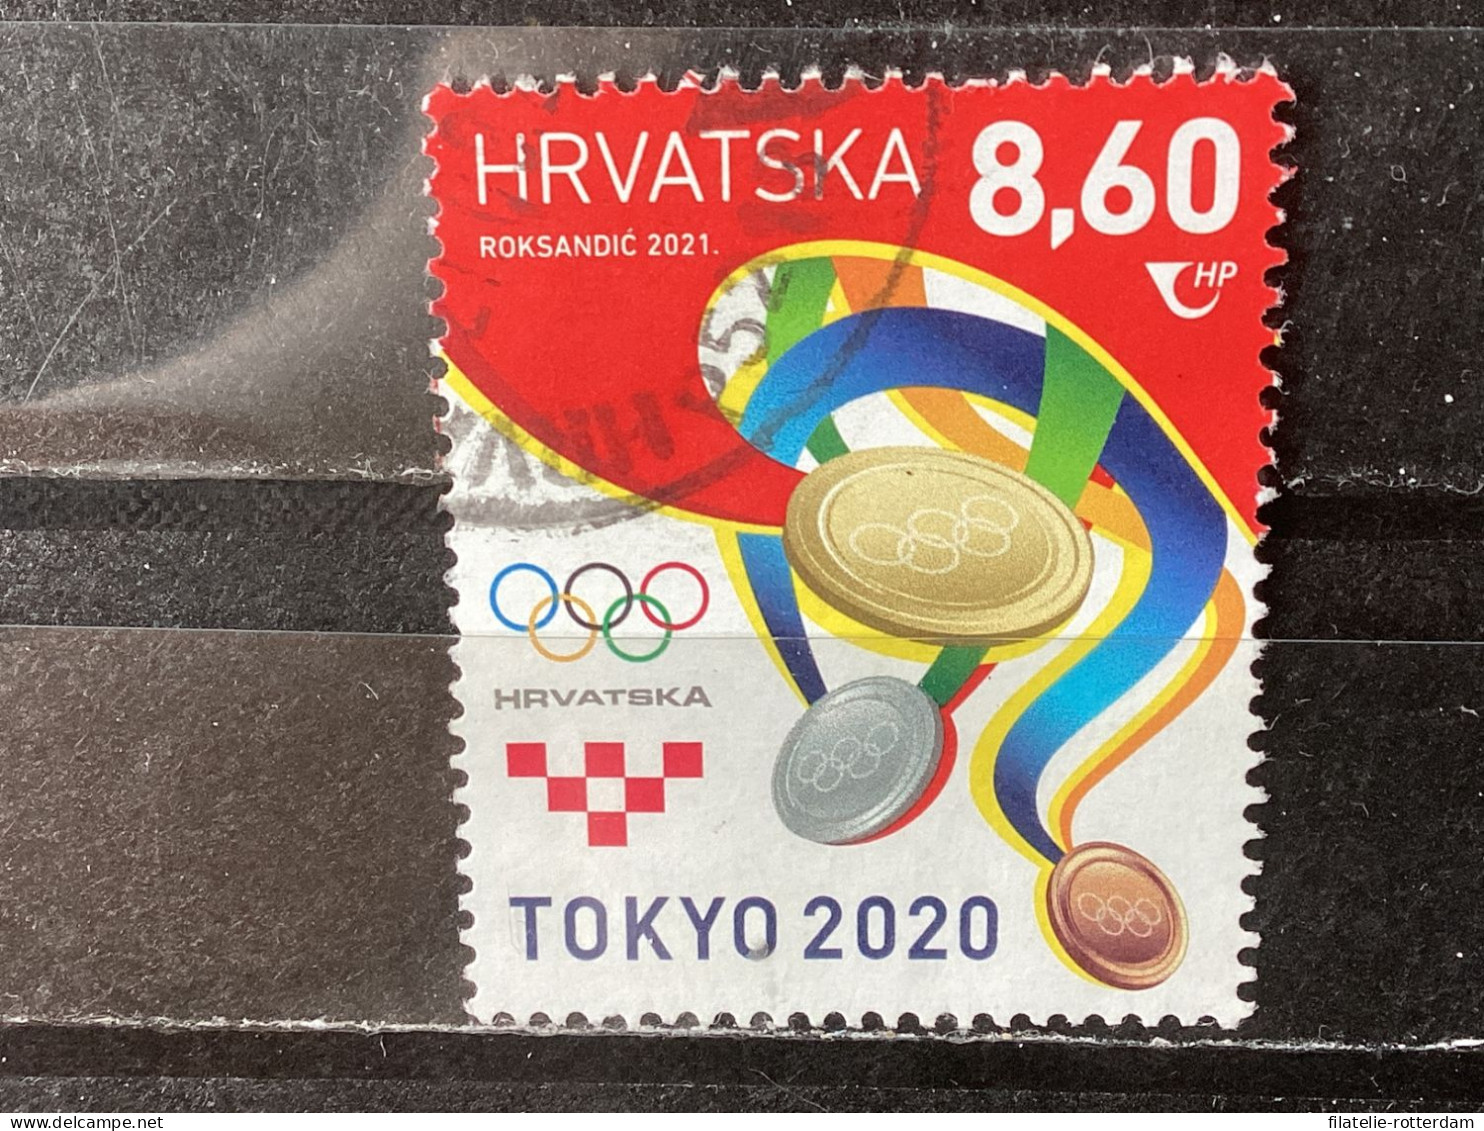 Croatia / Kroatië - Olympic Games (8.60) 2021 - Croacia